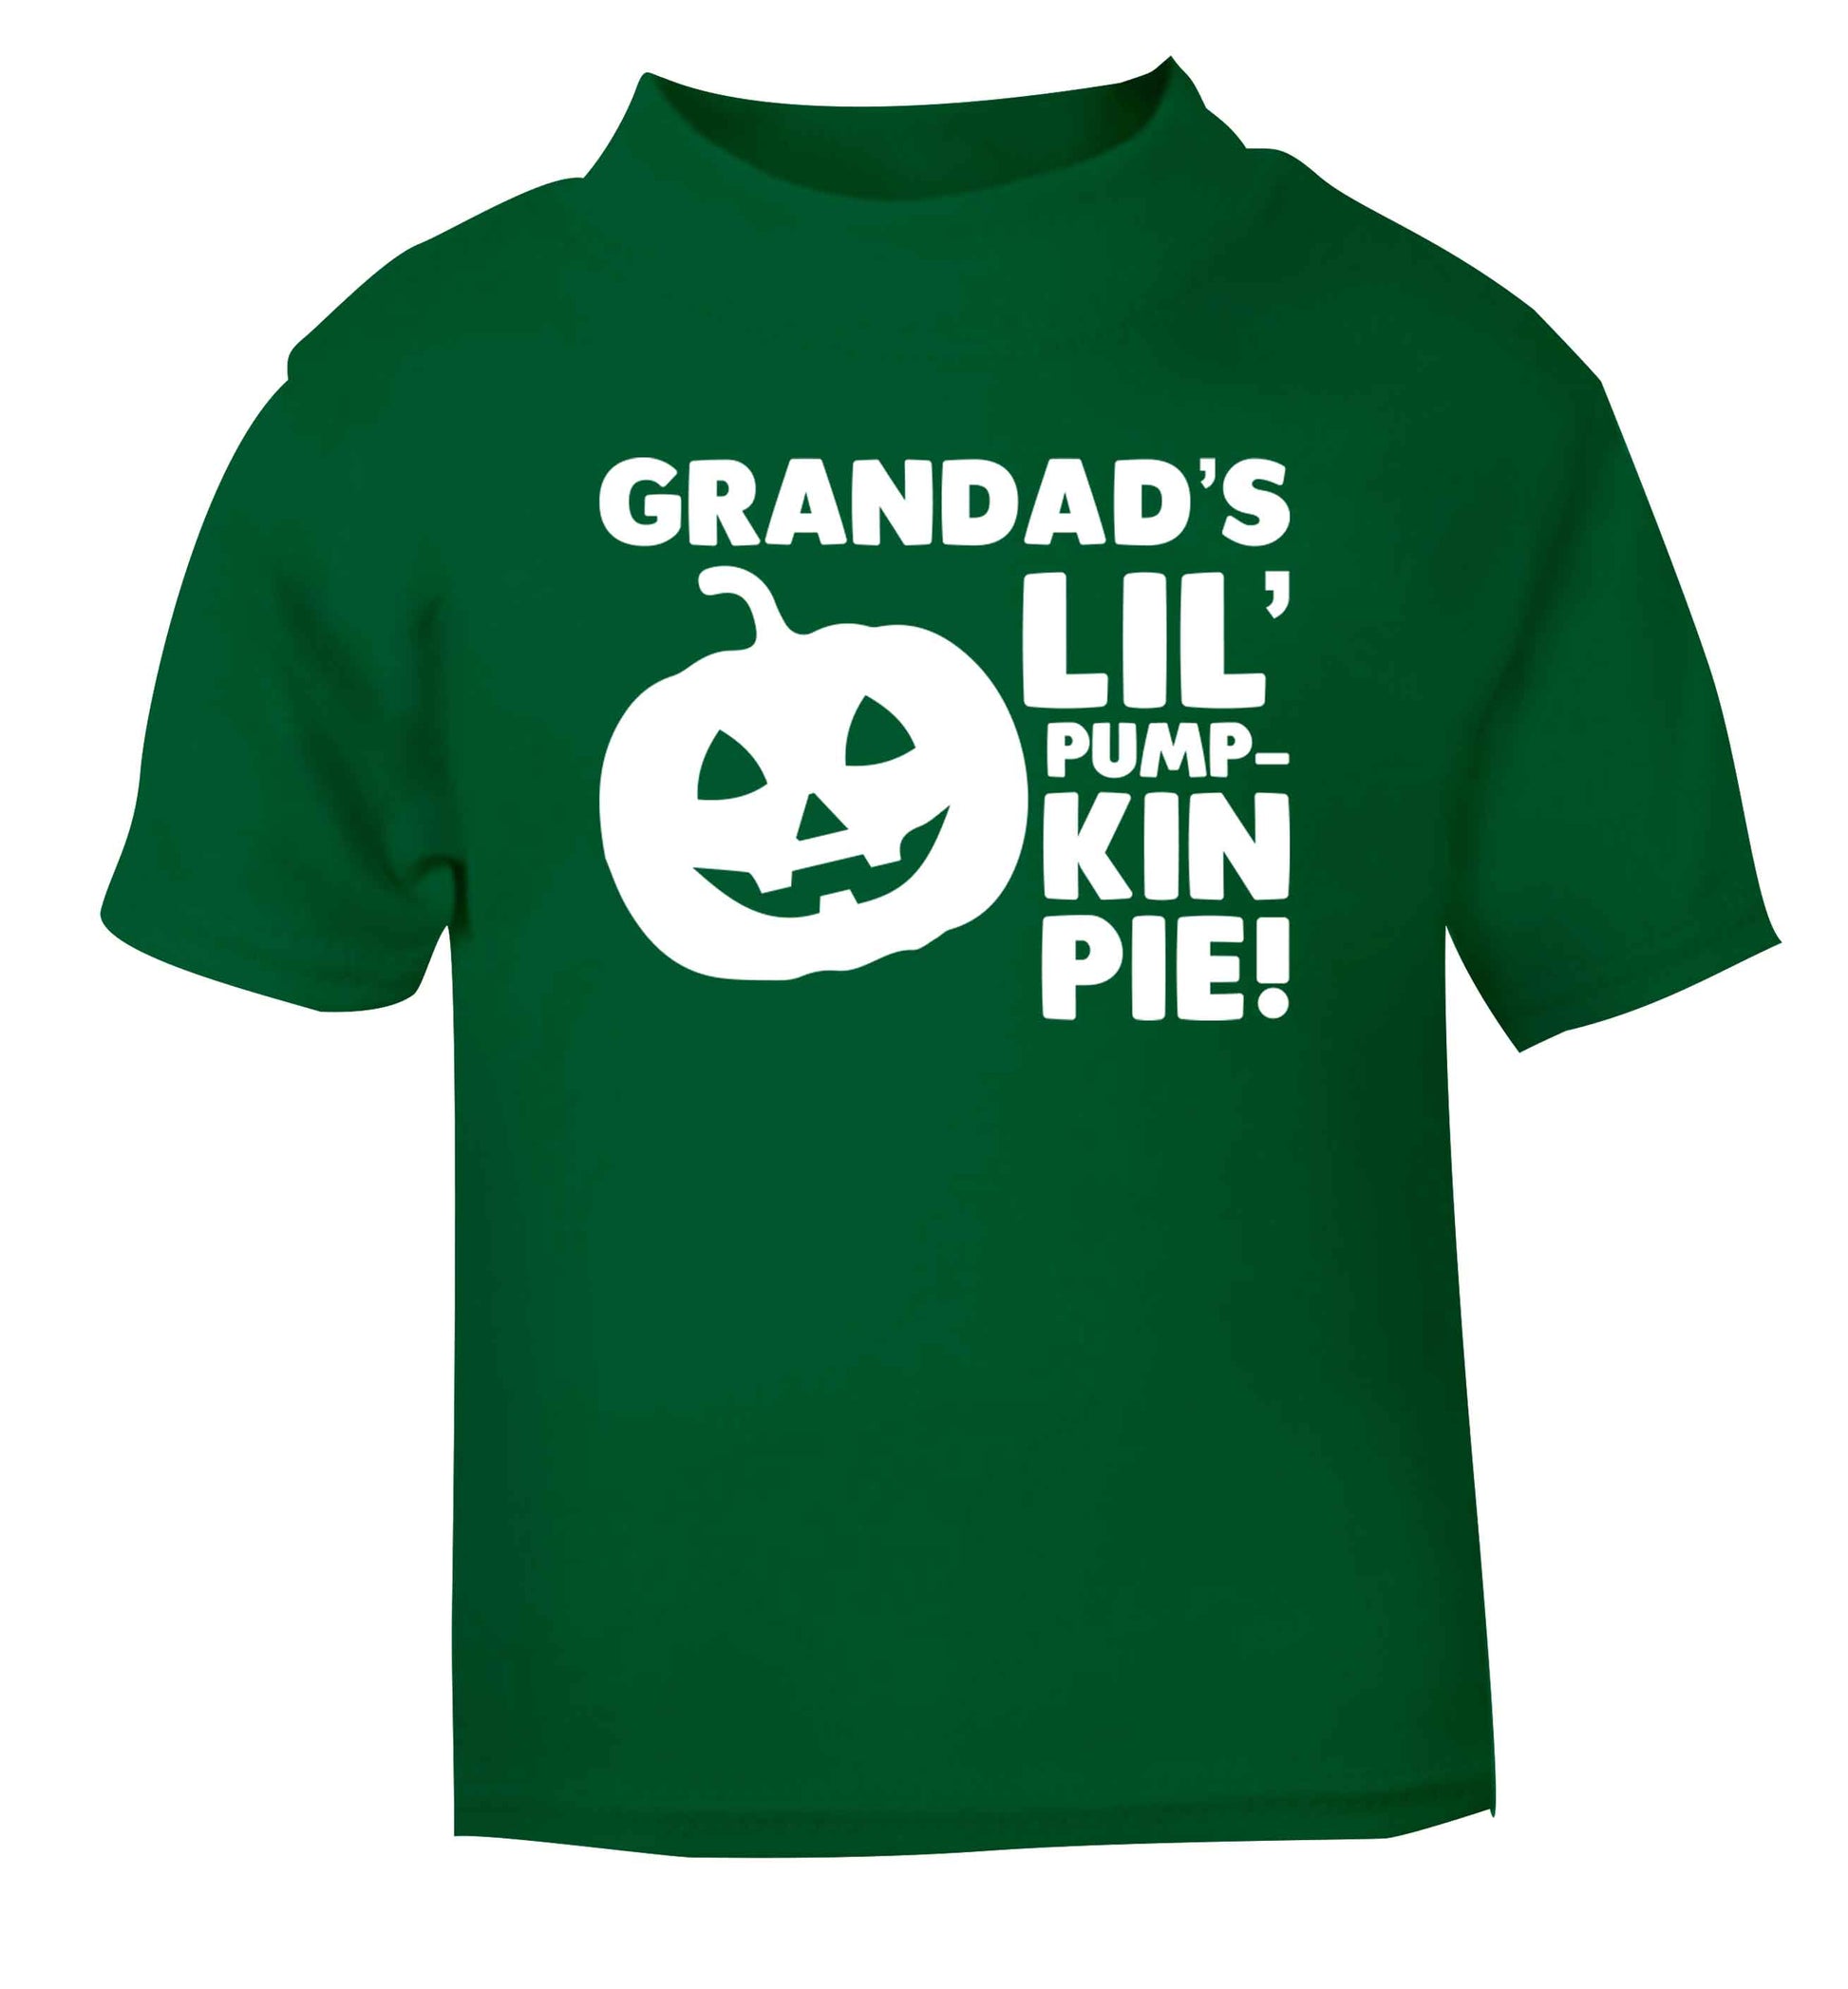 Daddy's lil' pumpkin pie green baby toddler Tshirt 2 Years